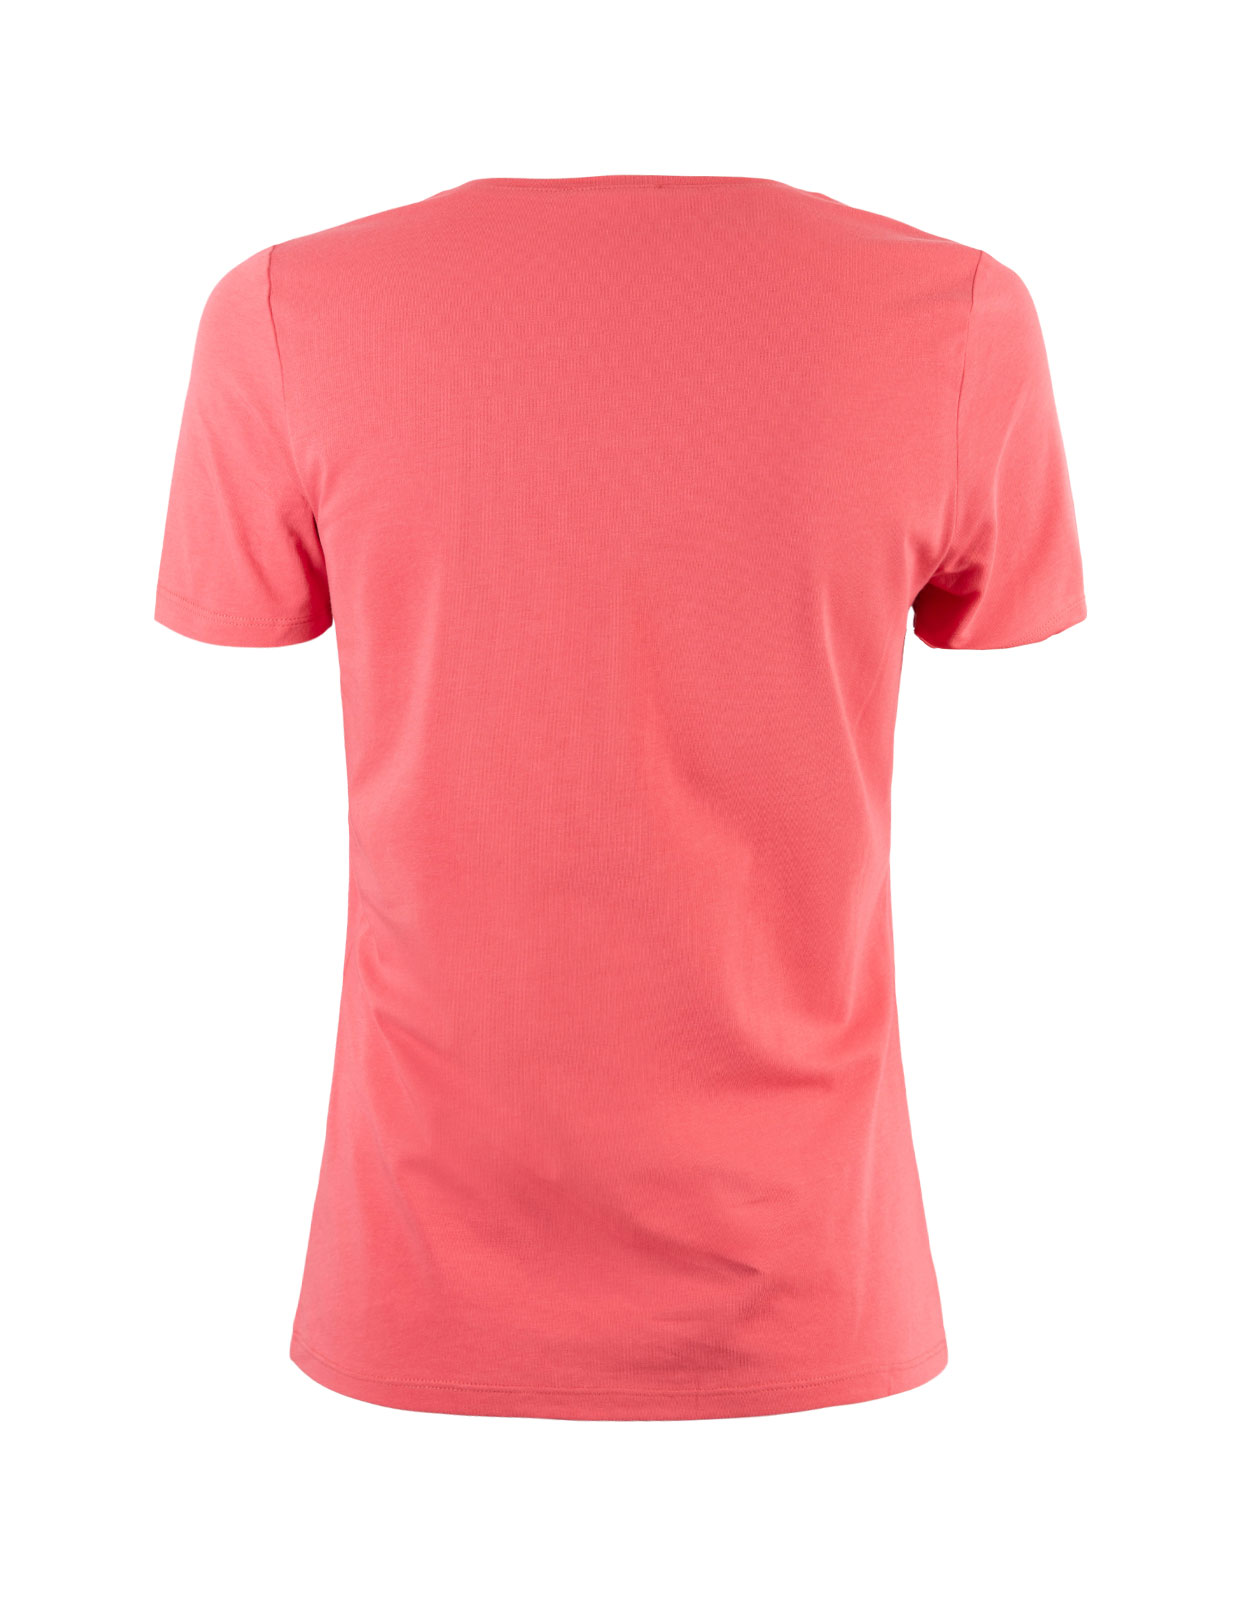 T-Shirt Ceriserosa Stl 44